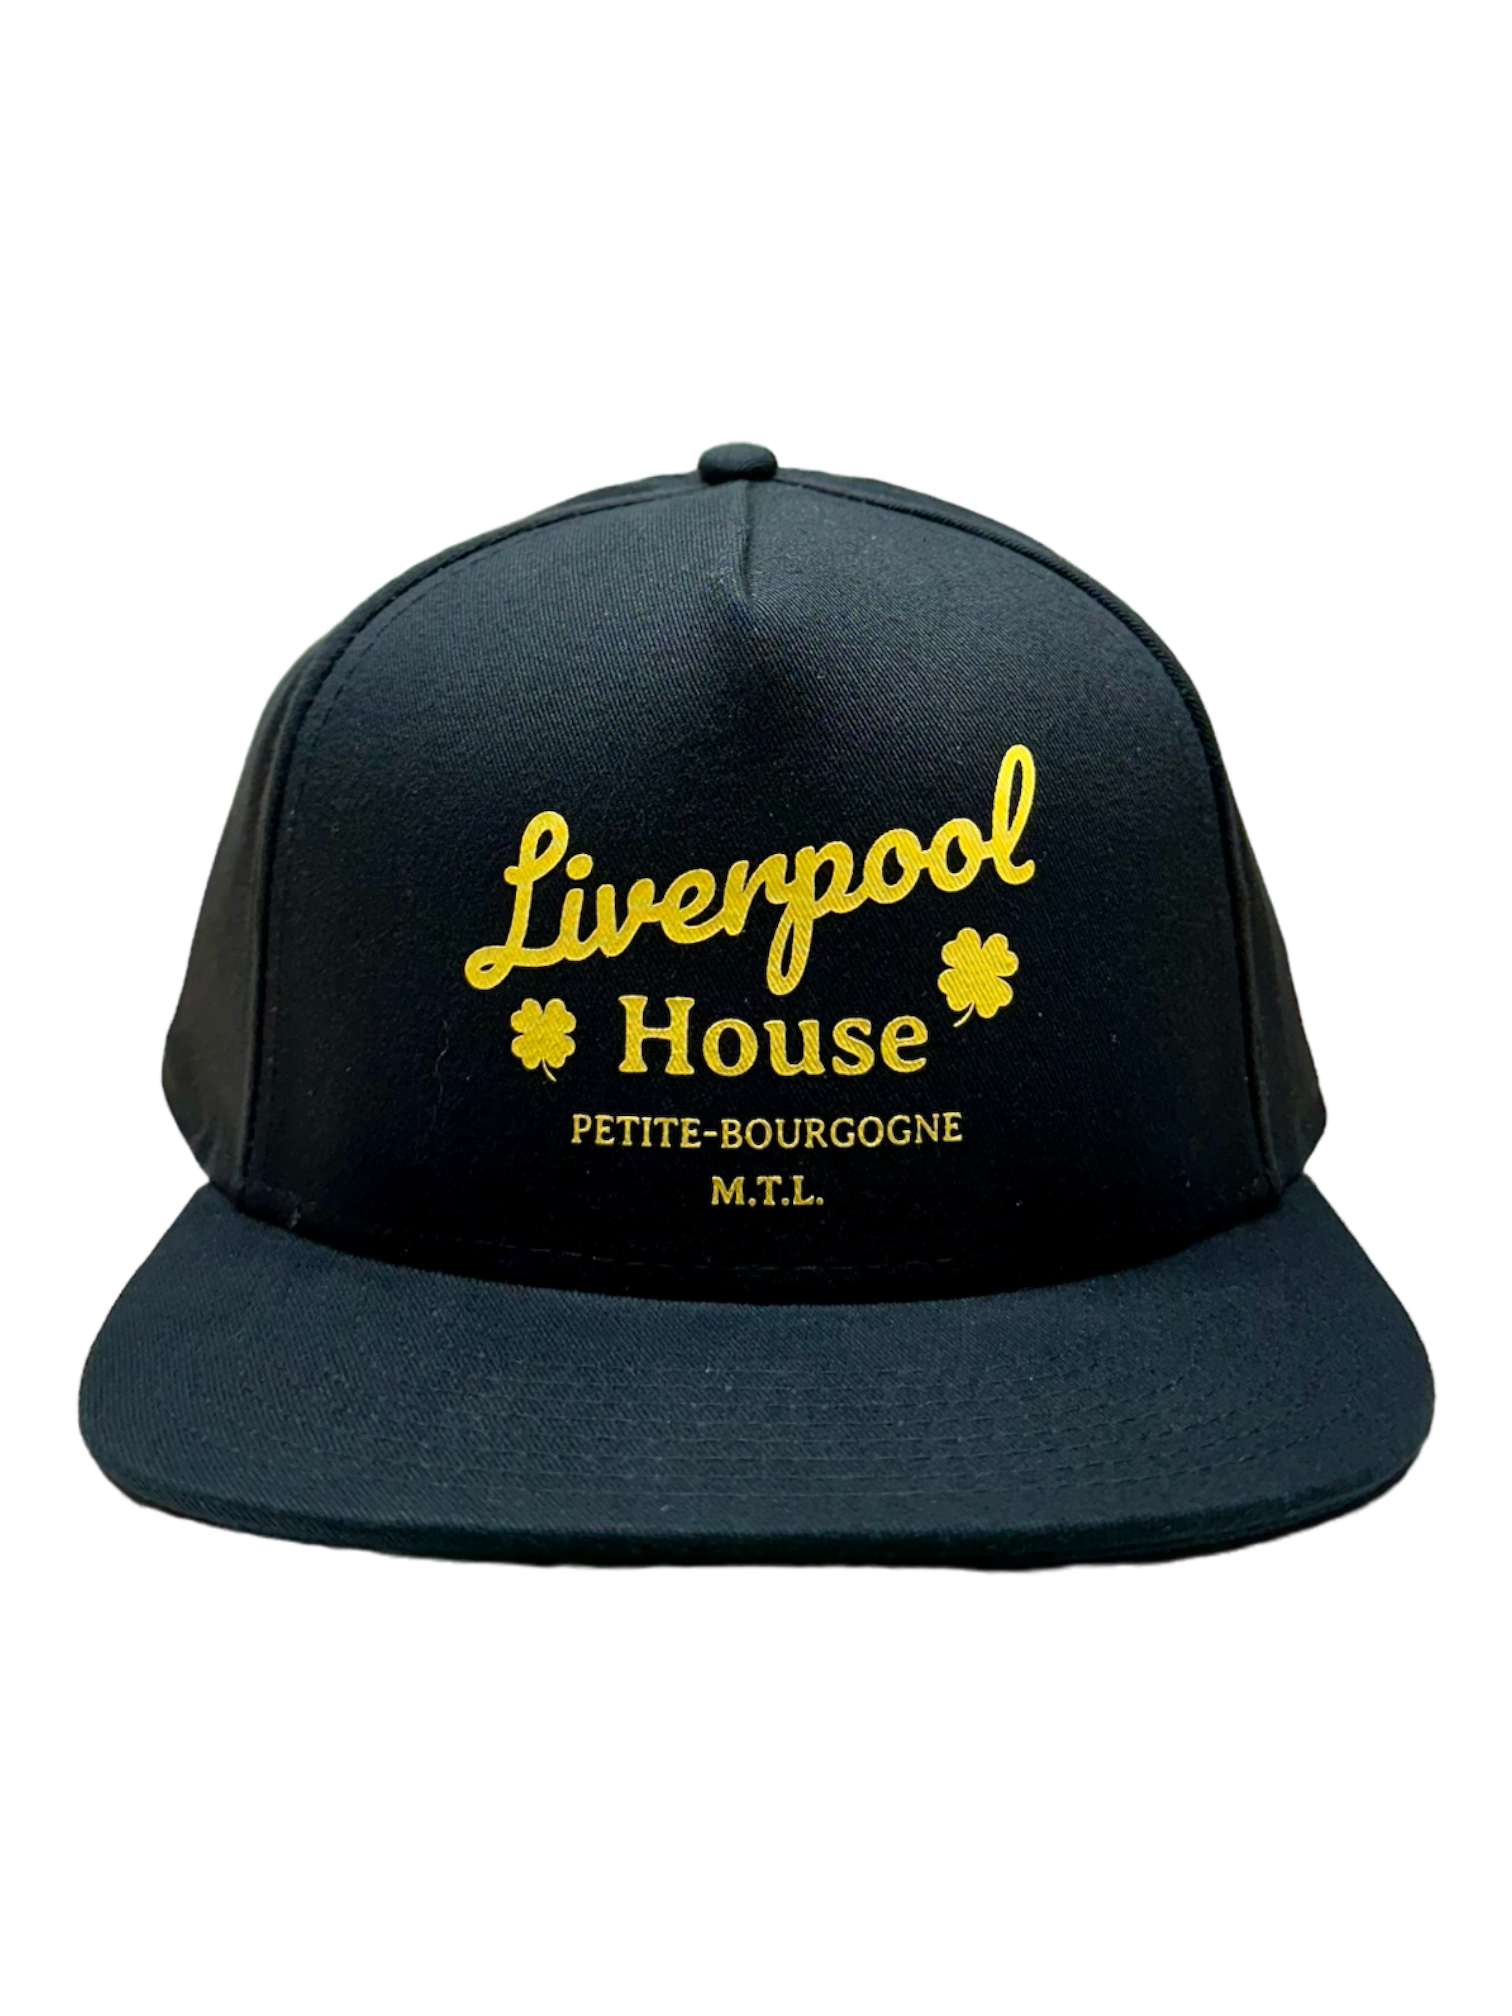 Liverpool House Cap in black